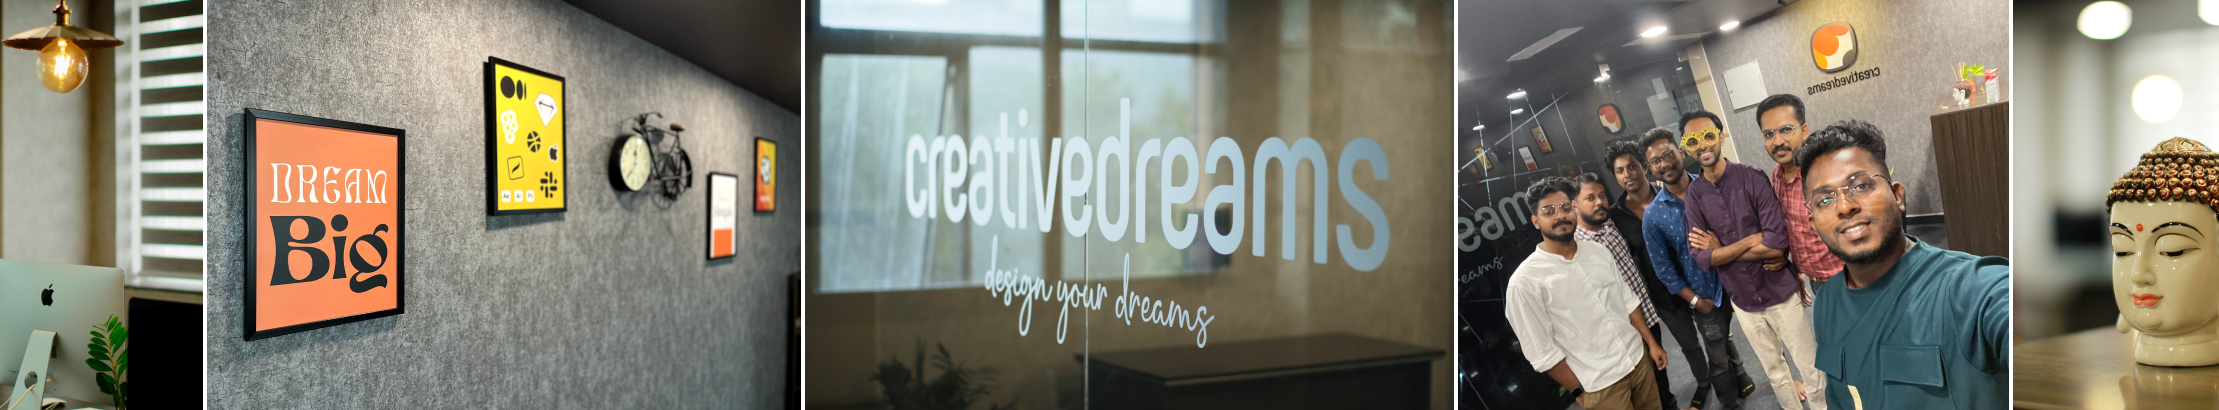 Creative Dreams profil başlığı